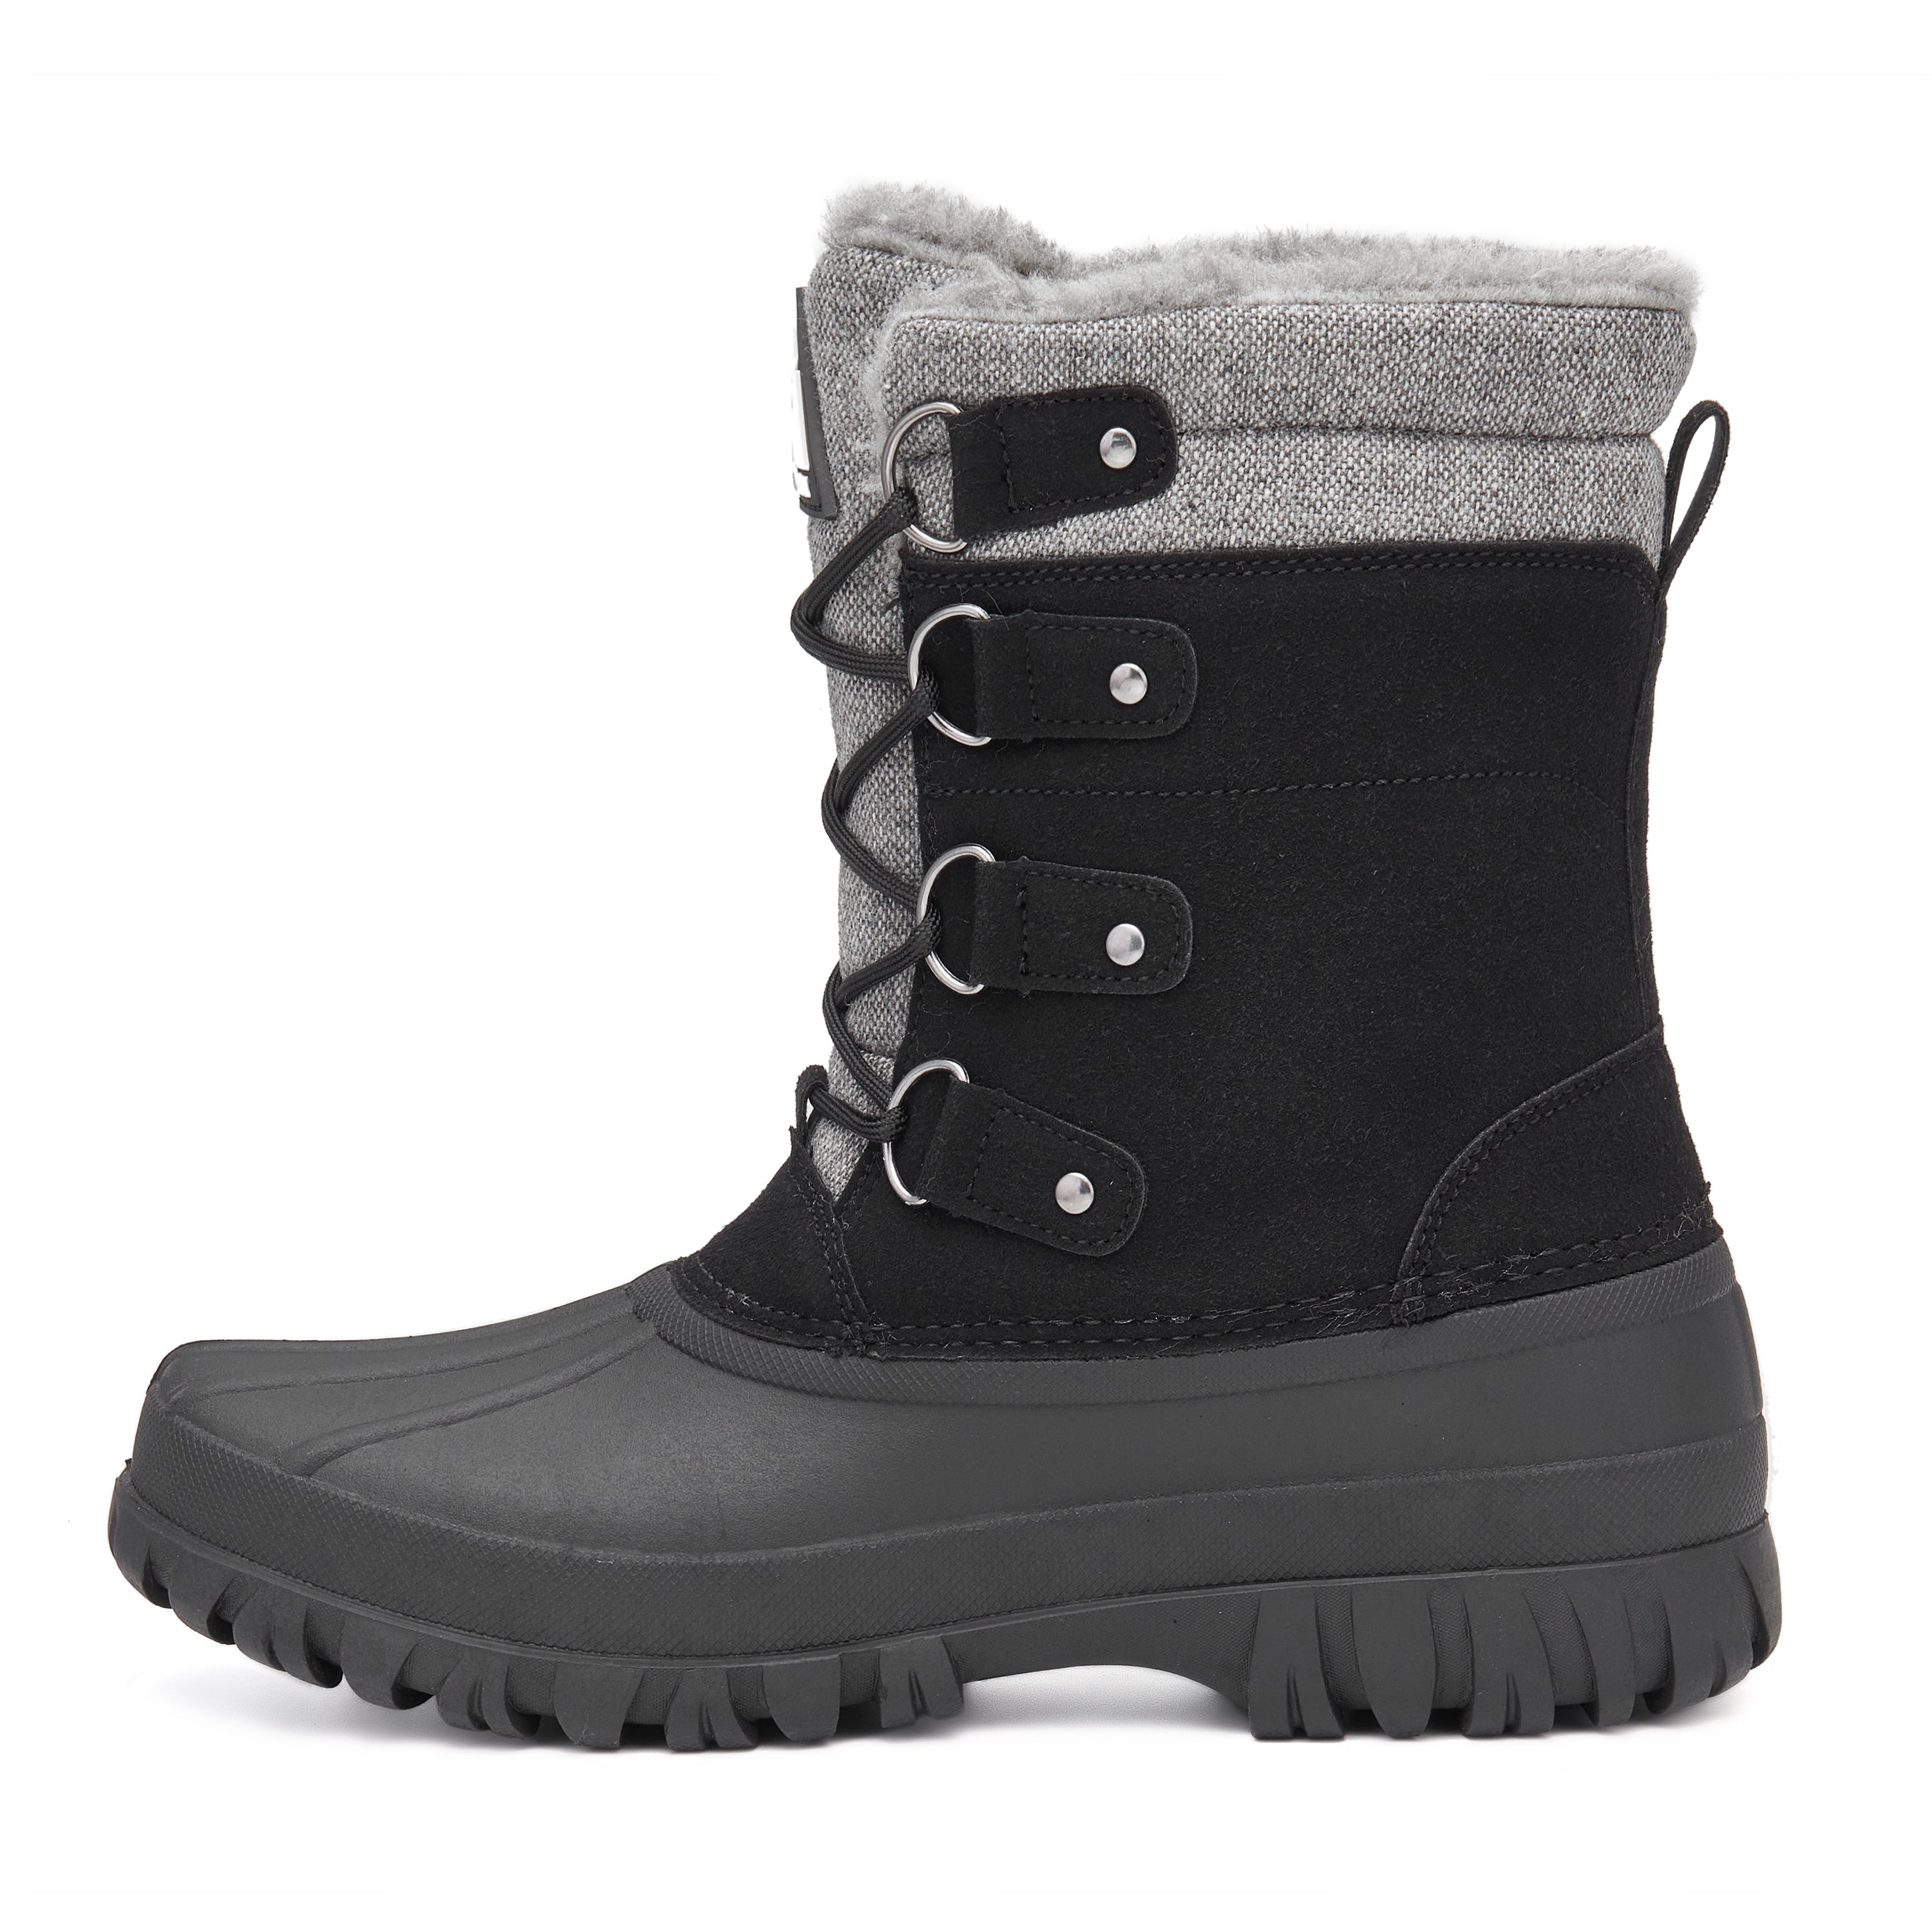 Mishansha Women's Snow Boots Outdoor Warm Mid-Calf Booties Anti-Skid Water Resistant Winter Shoes